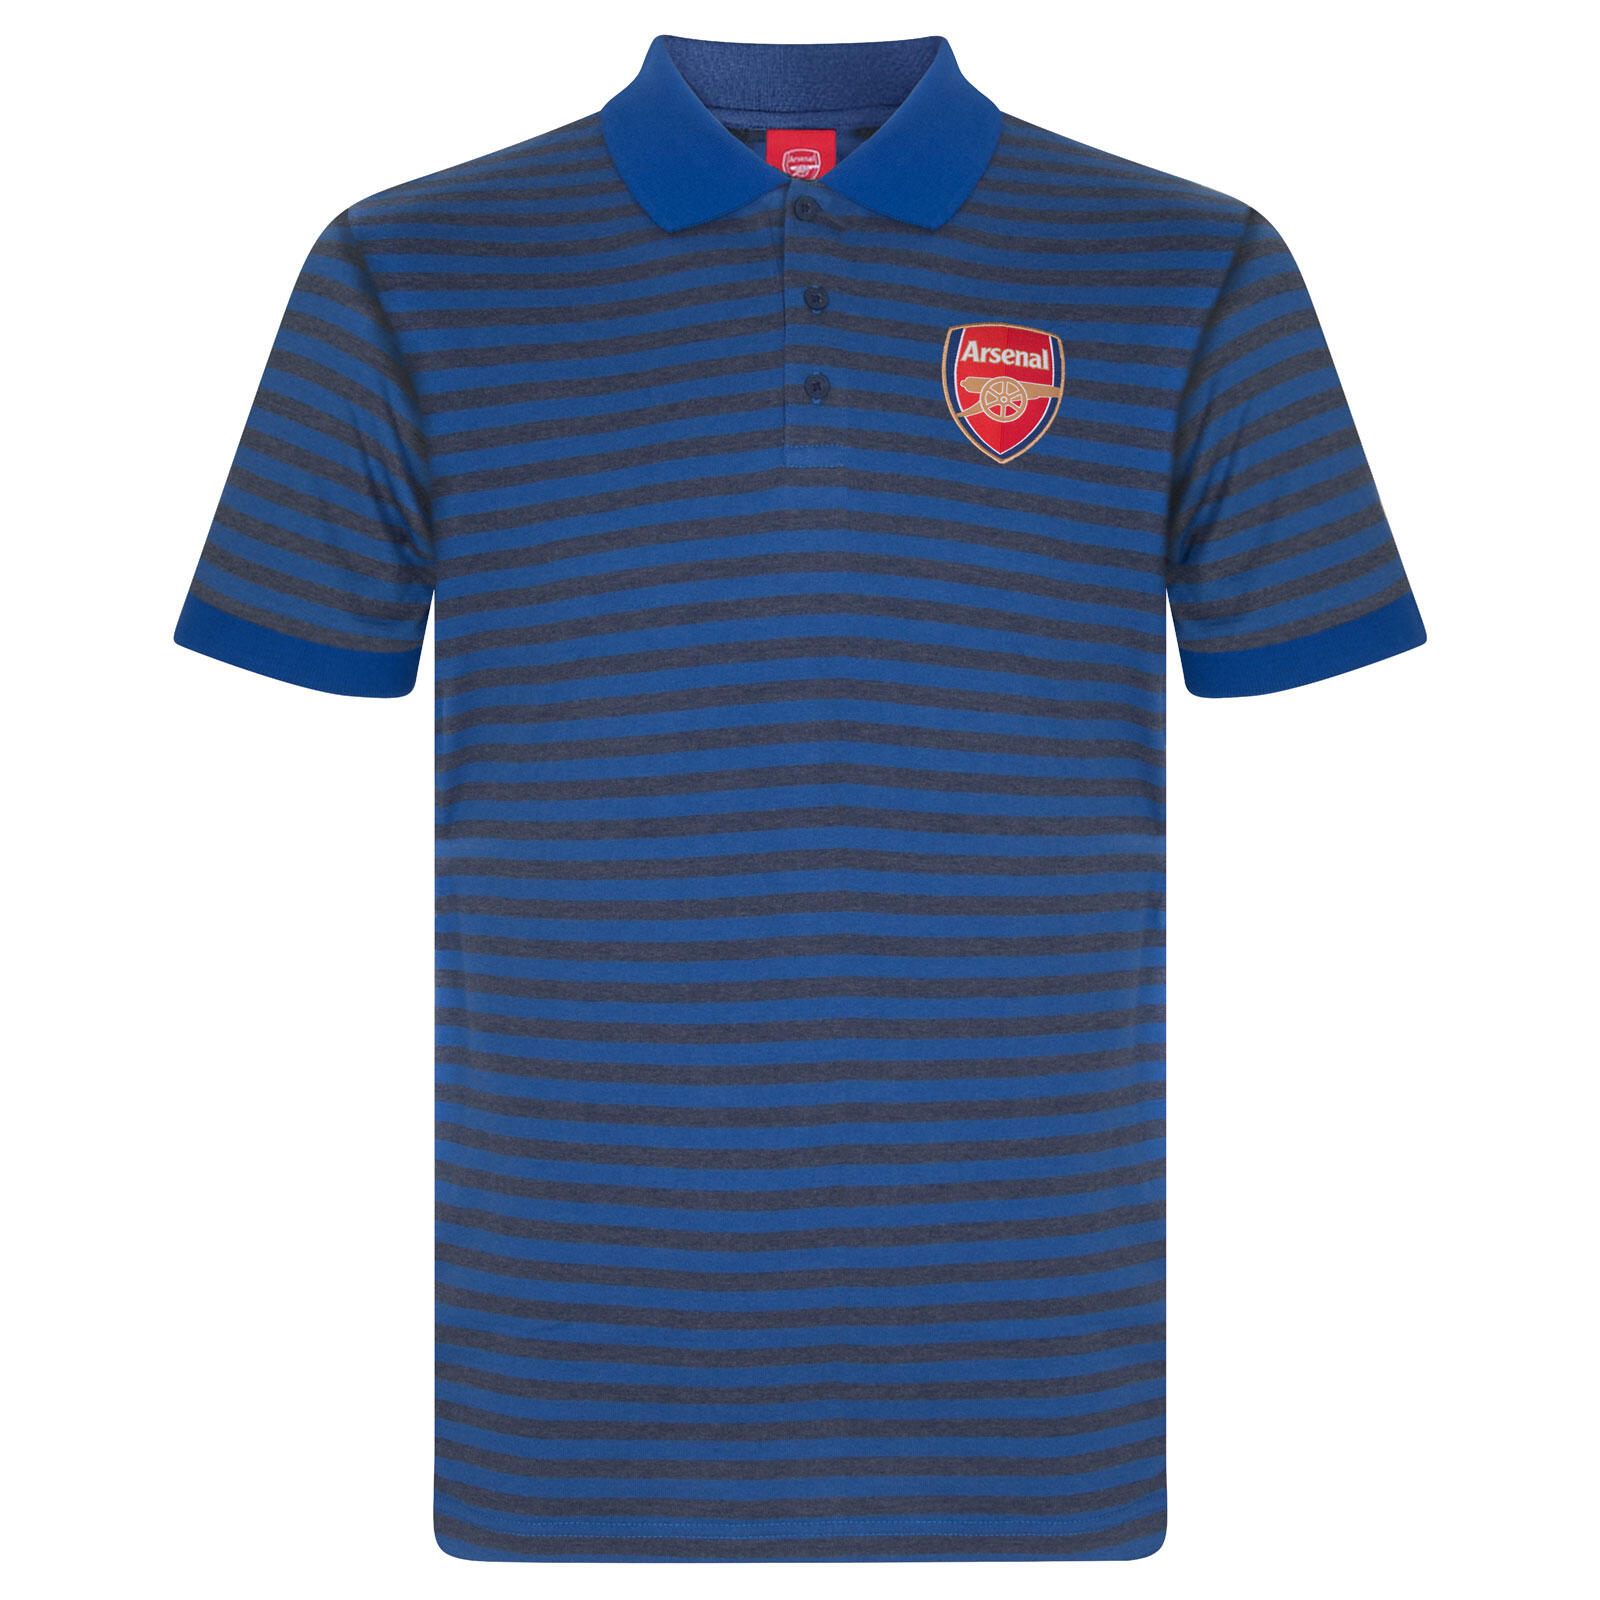 ARSENAL Arsenal FC Mens Polo Shirt Striped Marl Yarn Dye OFFICIAL Football Gift